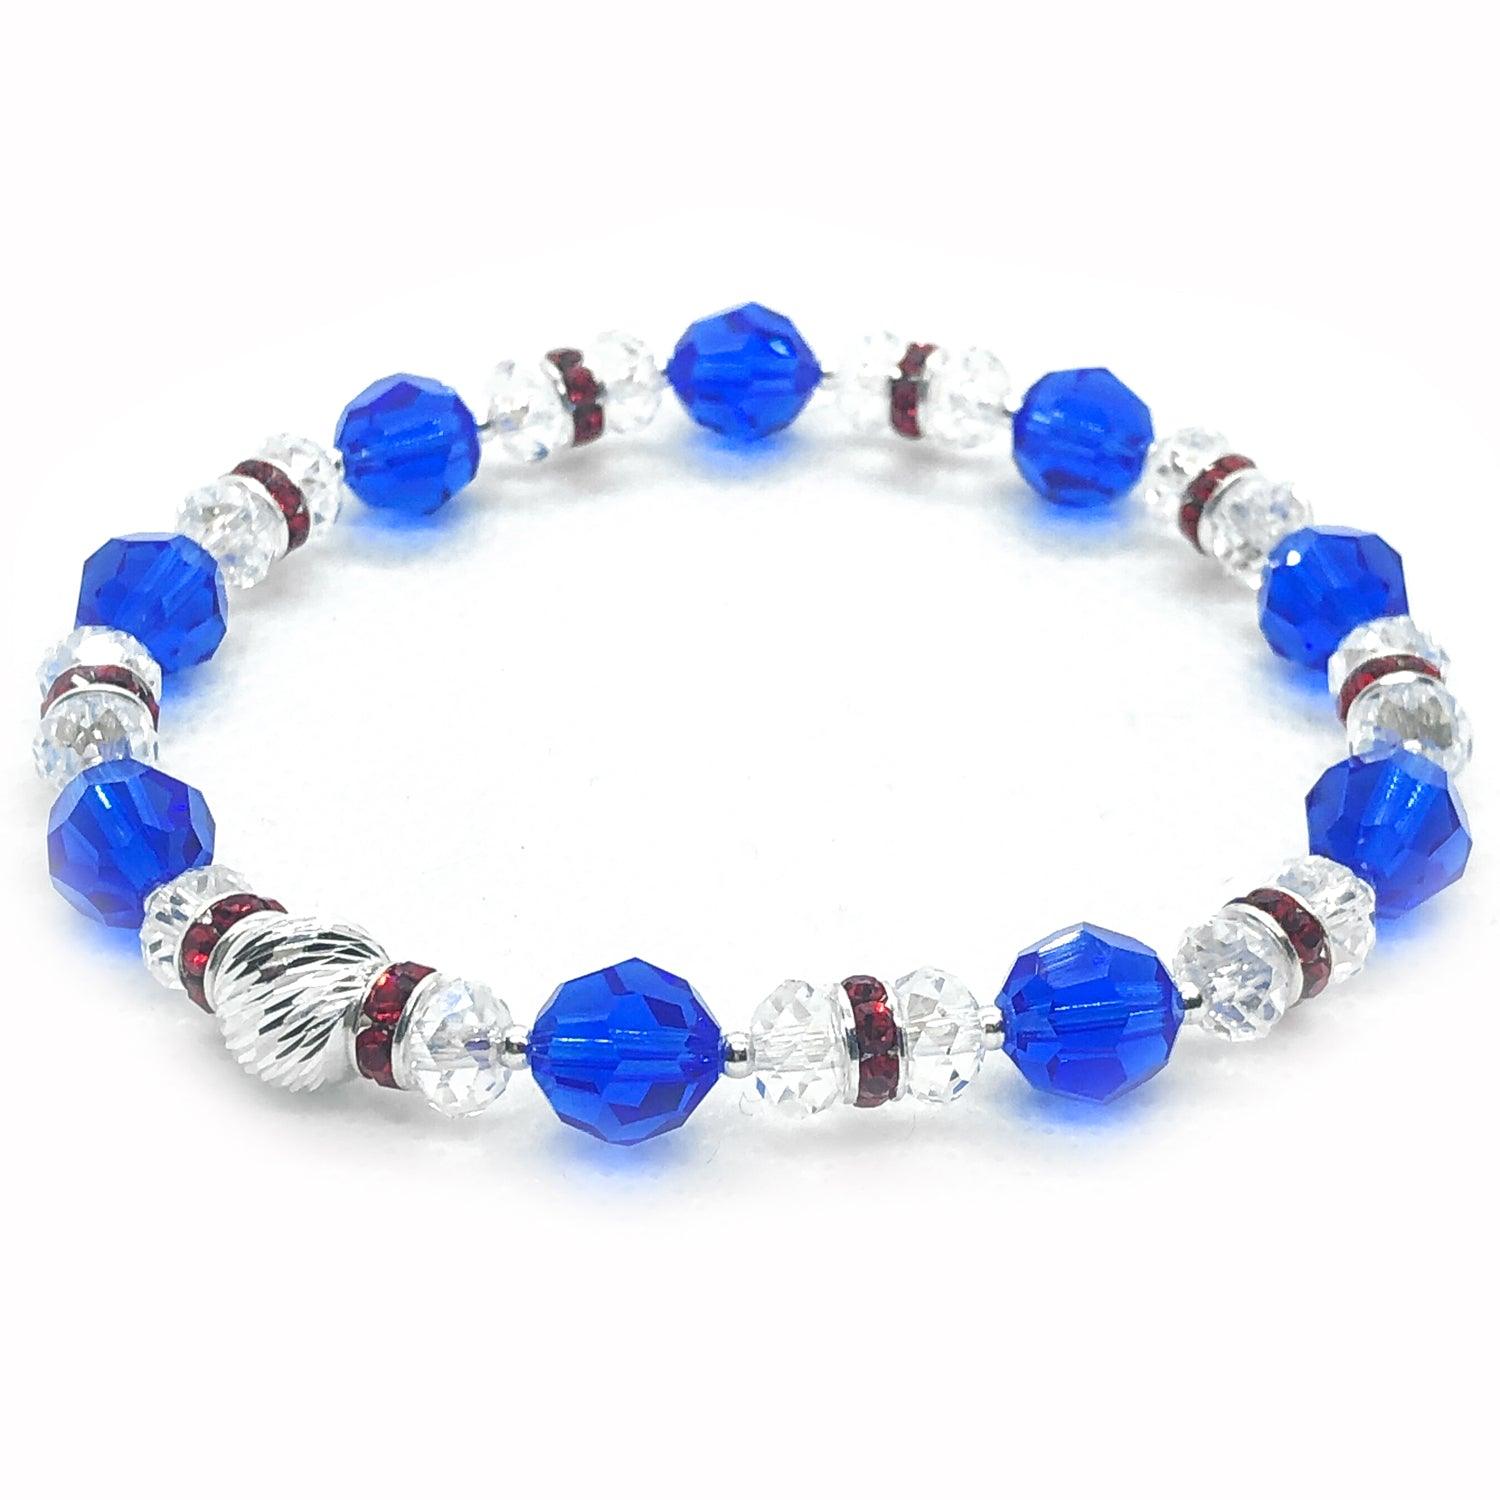 Bracelet Kit - Red, White and Blue Stretch Bracelet